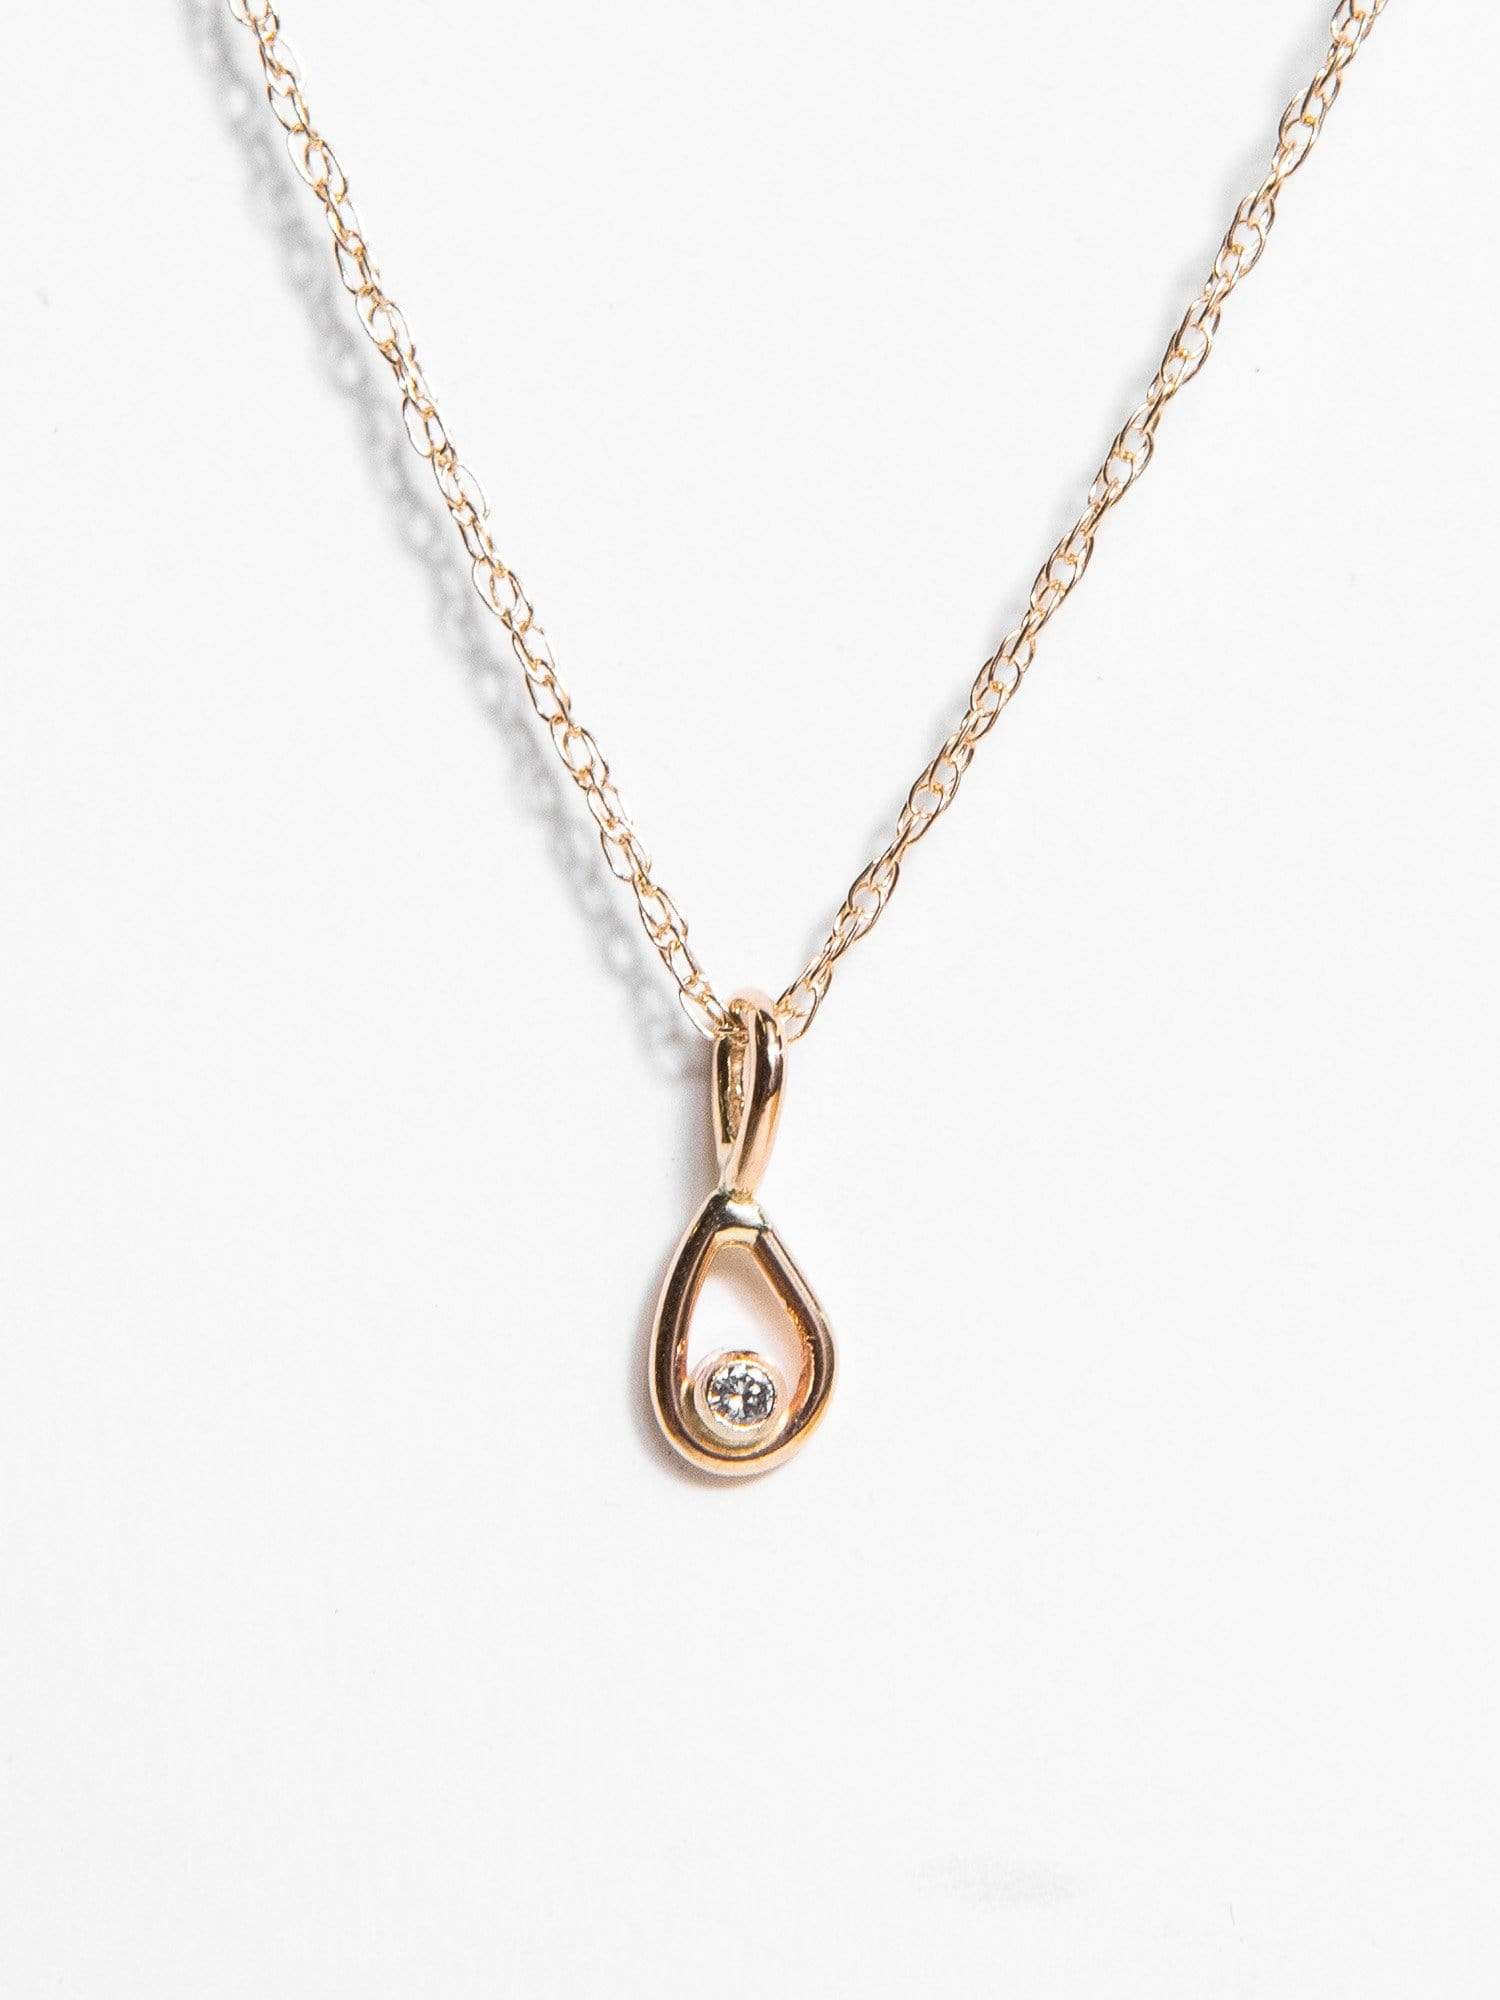 OXB Studio Necklace Diamond Droplet, 14K gold